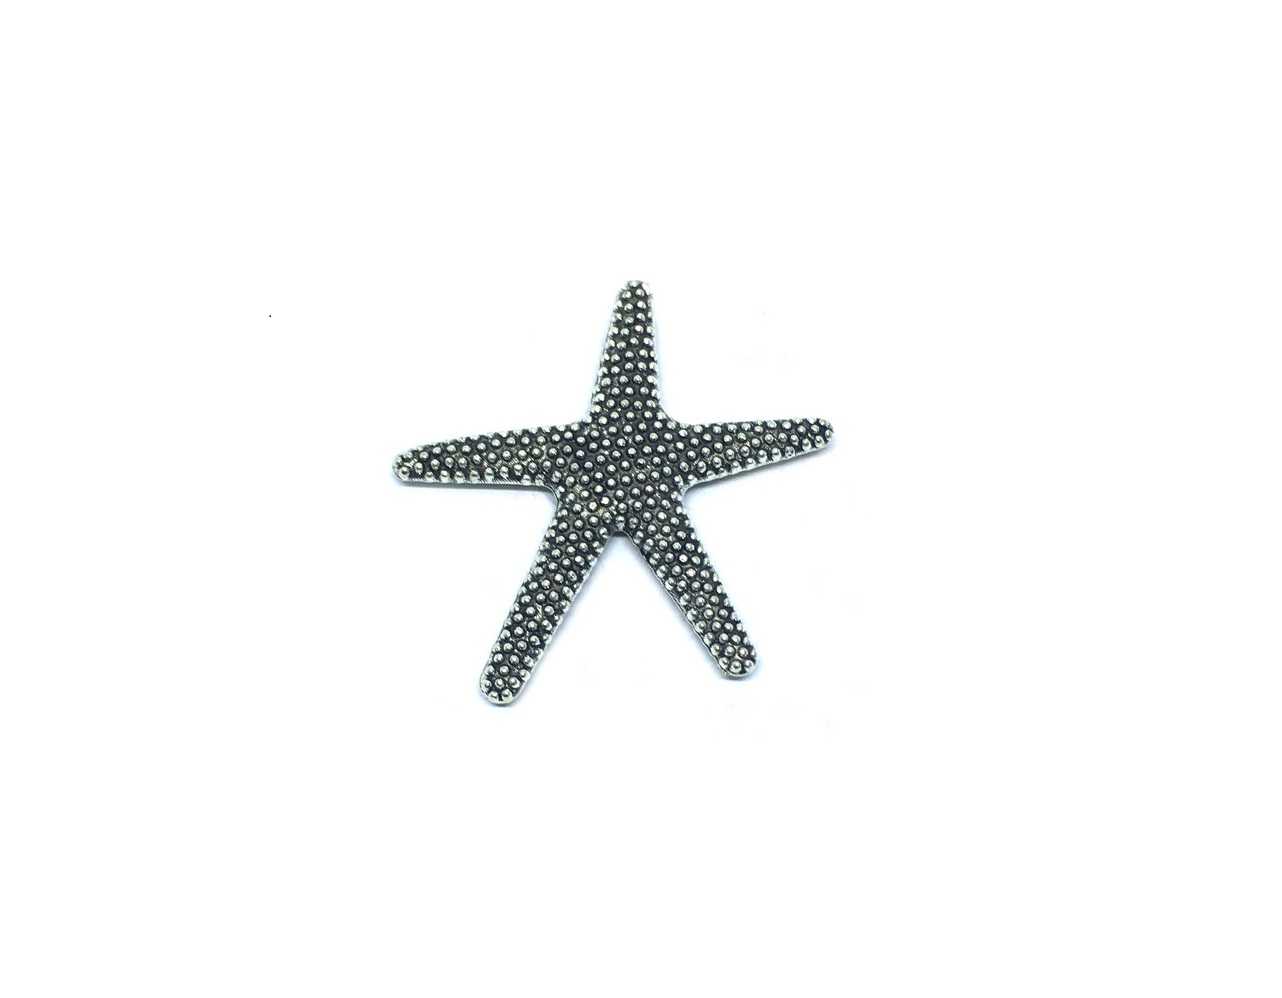 Antique Starfish Lapel Pin